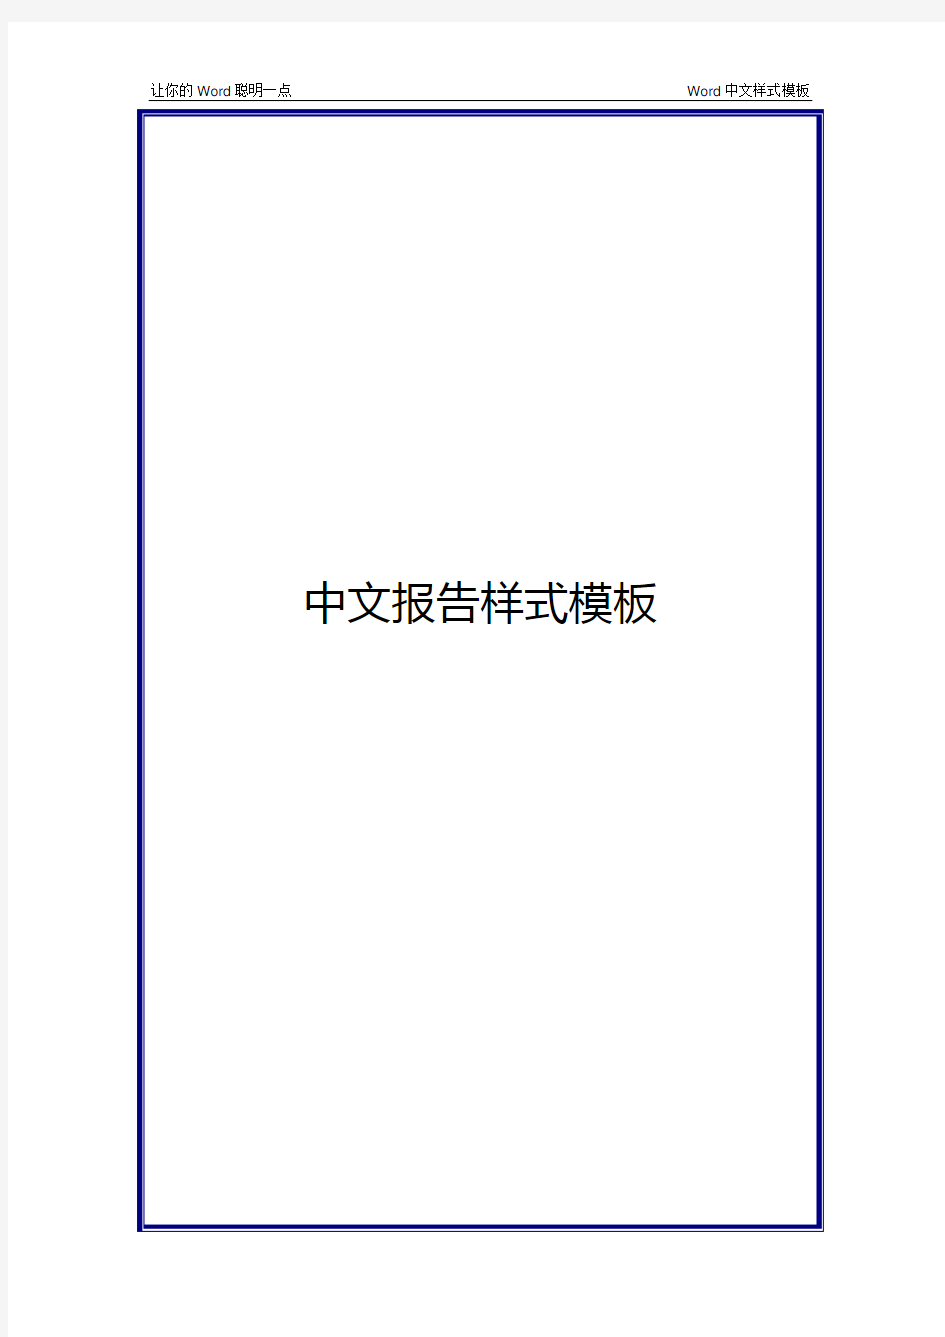 Word 中文报告样式模板